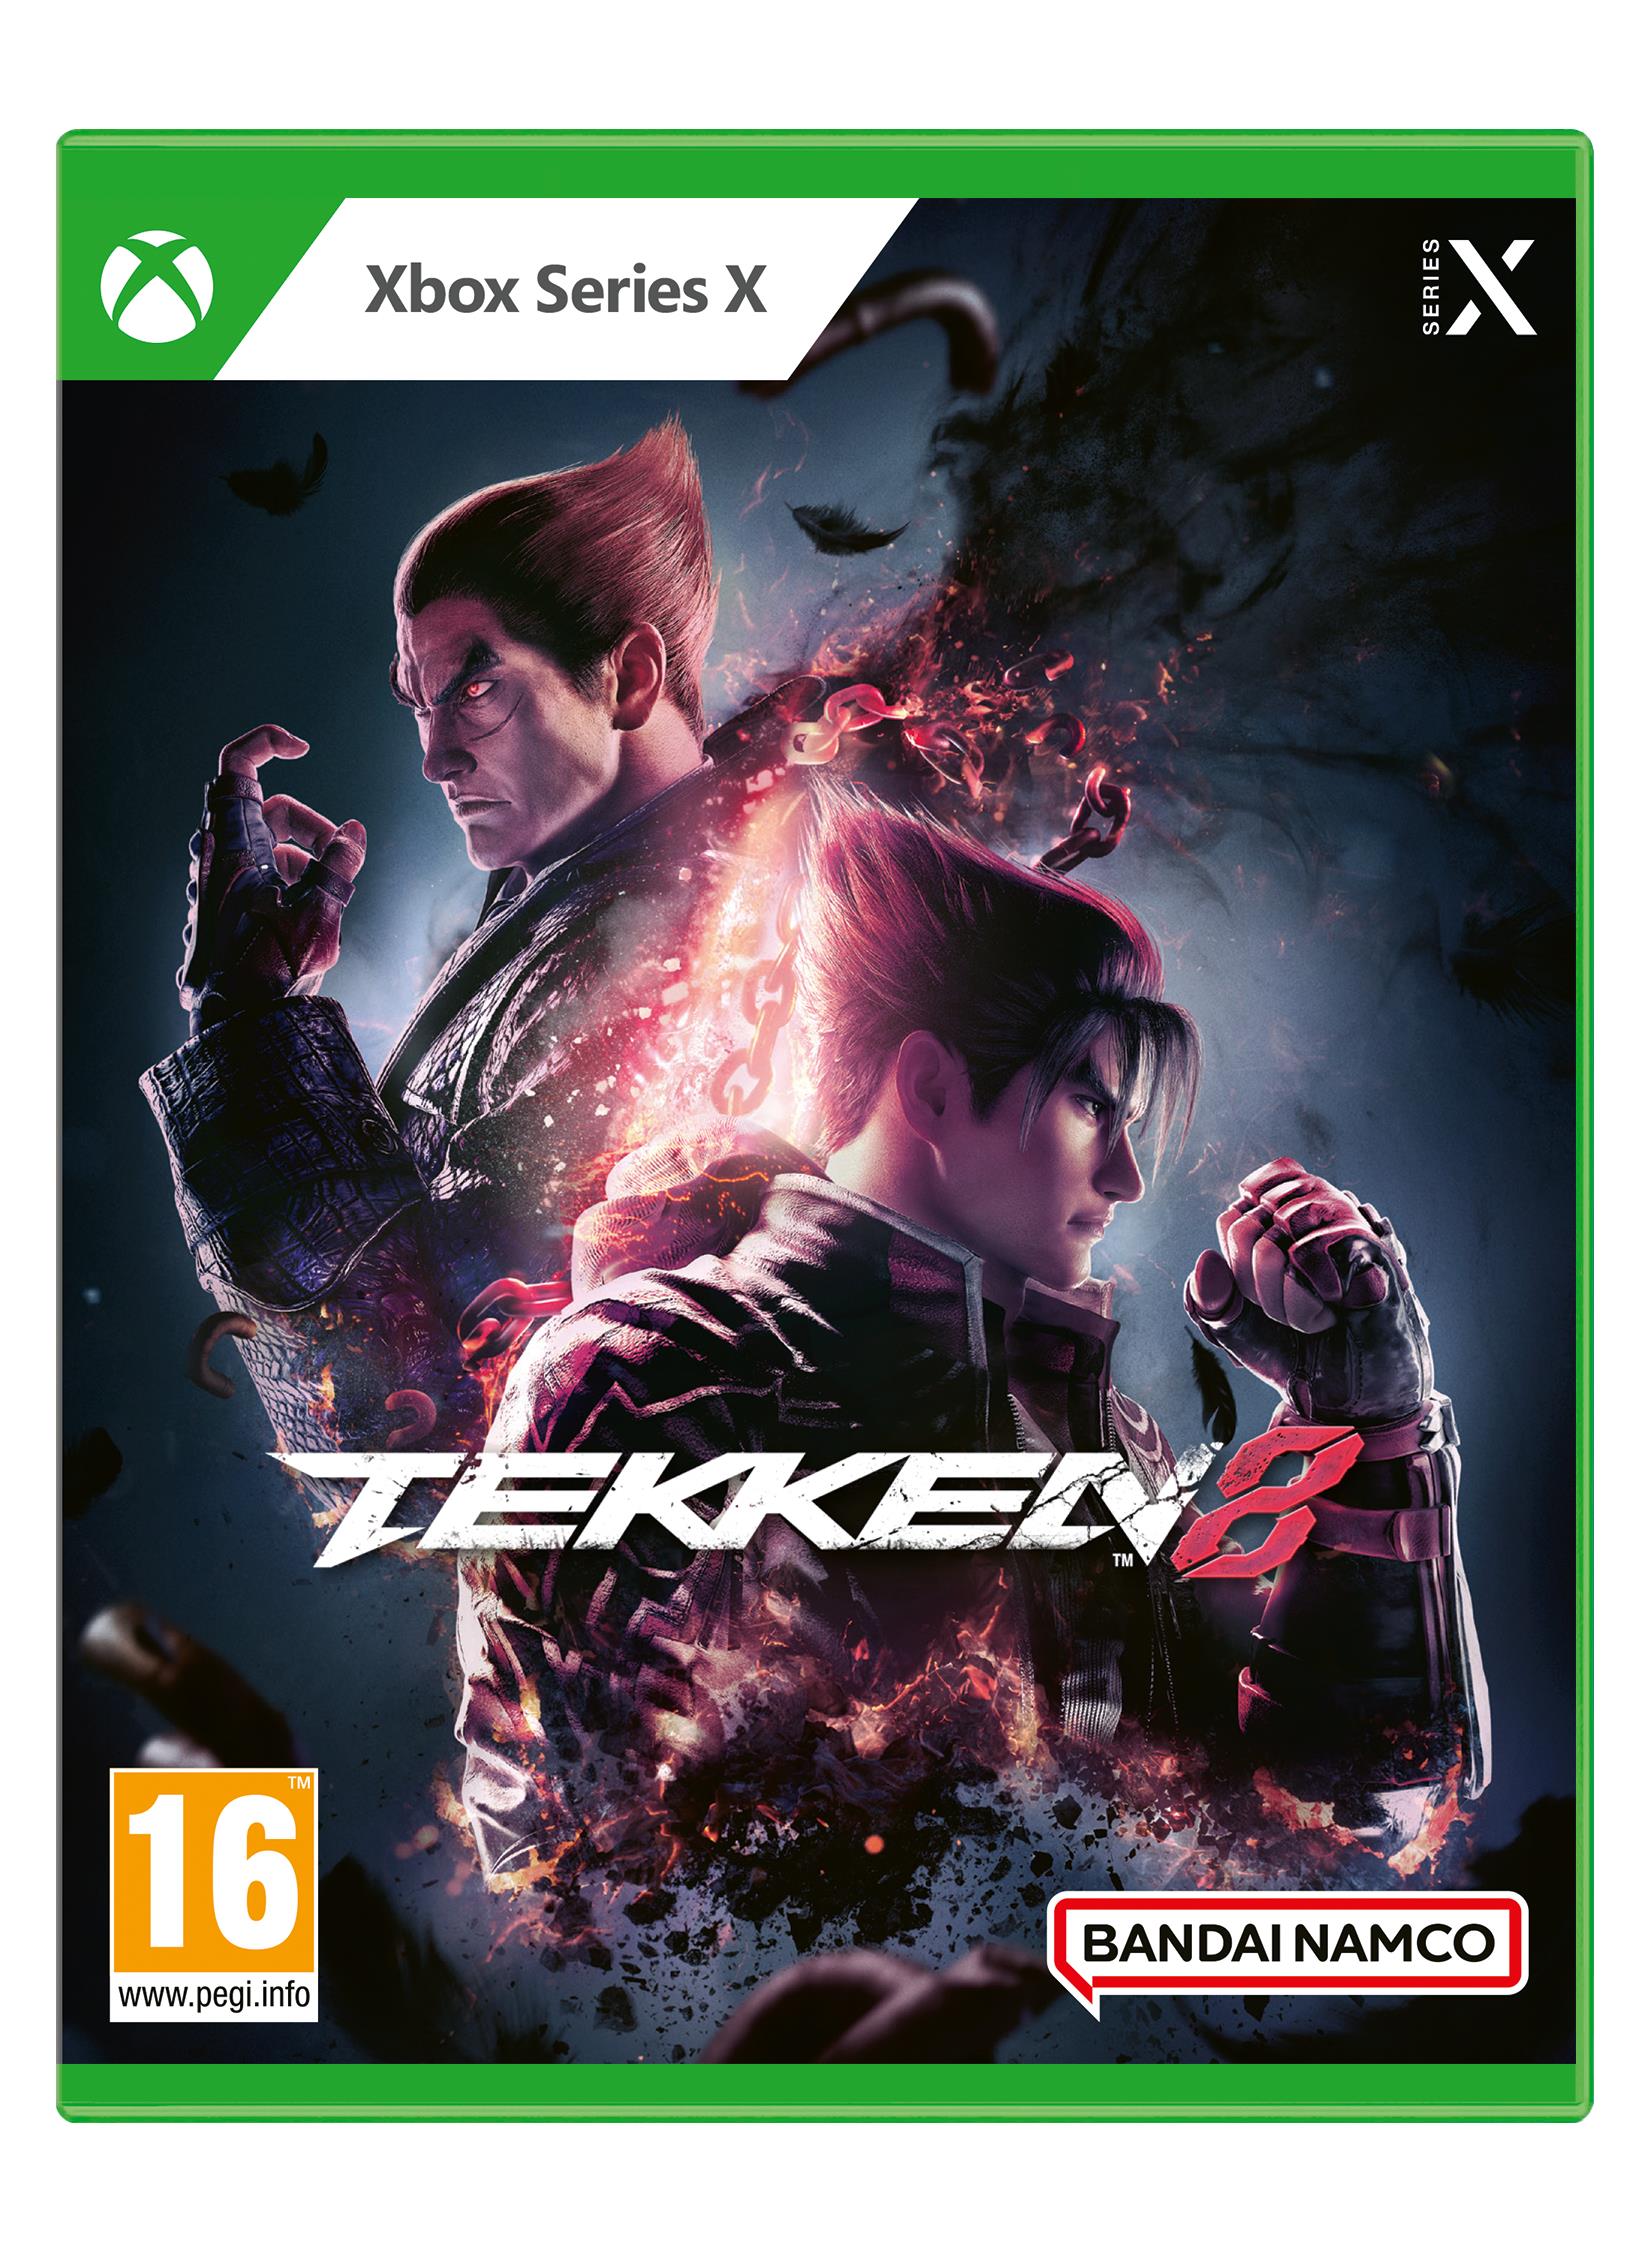 Bandai Namco Videogioco Tekken